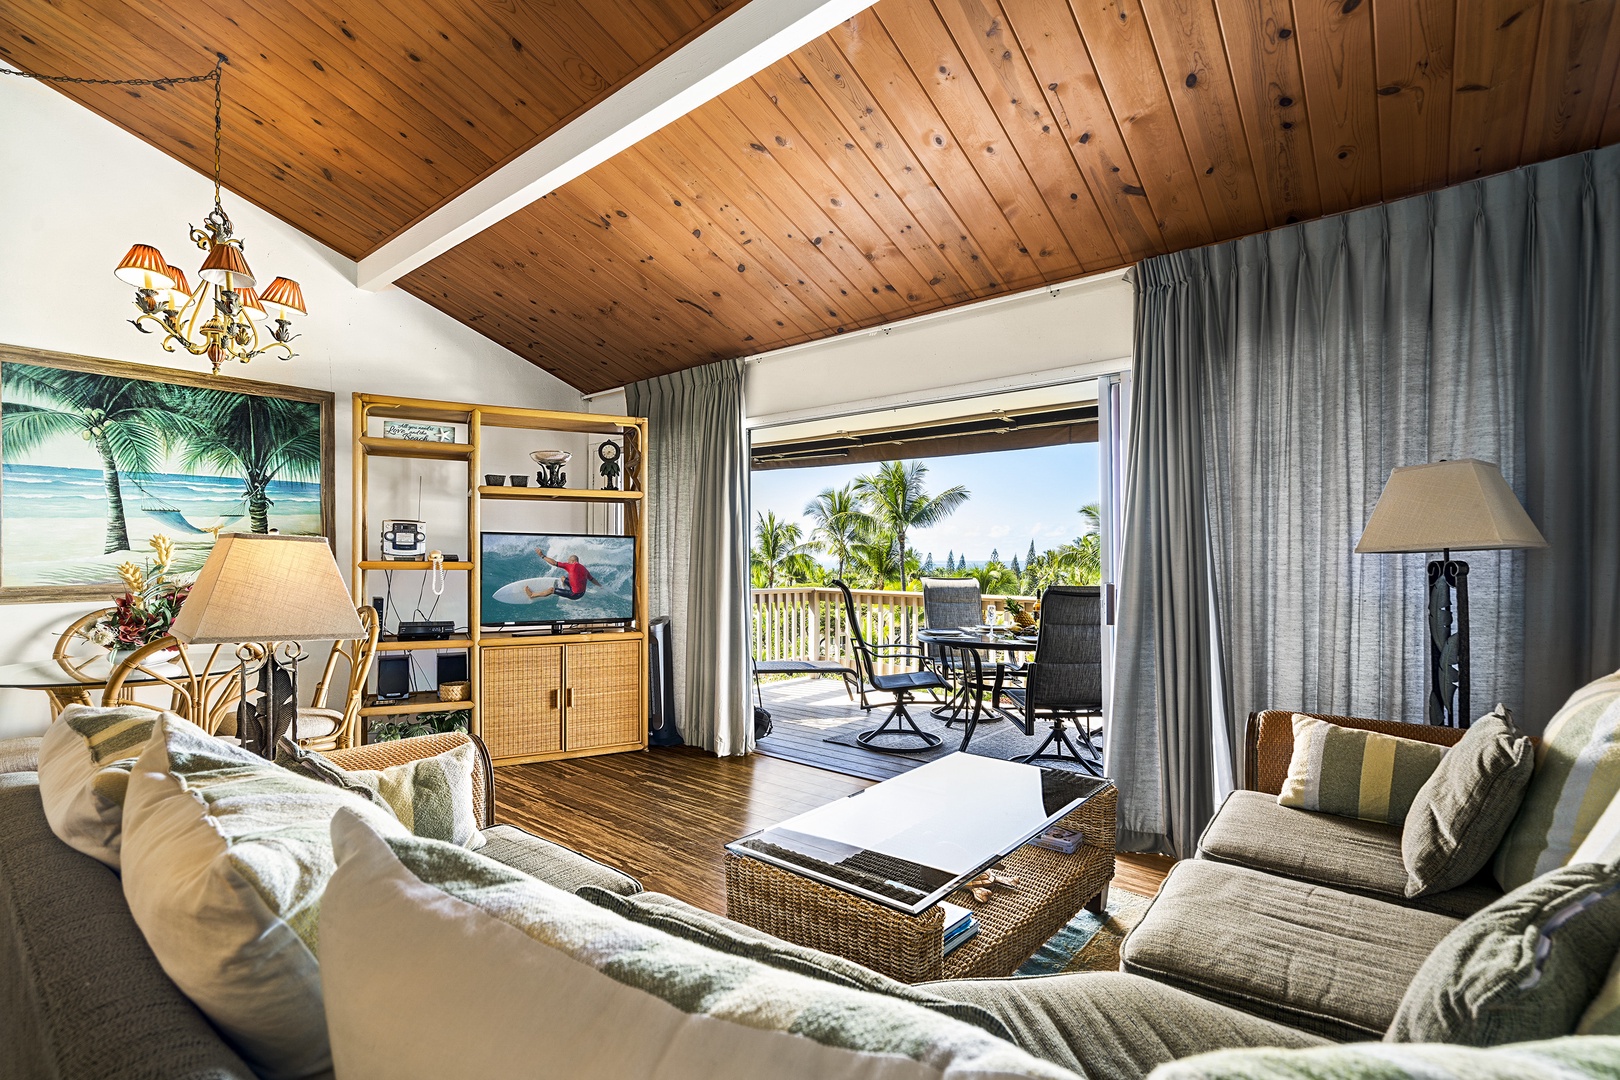 Kailua Kona Vacation Rentals, Keauhou Resort 125 - Vaulted ceiling and natural light enhance the living room